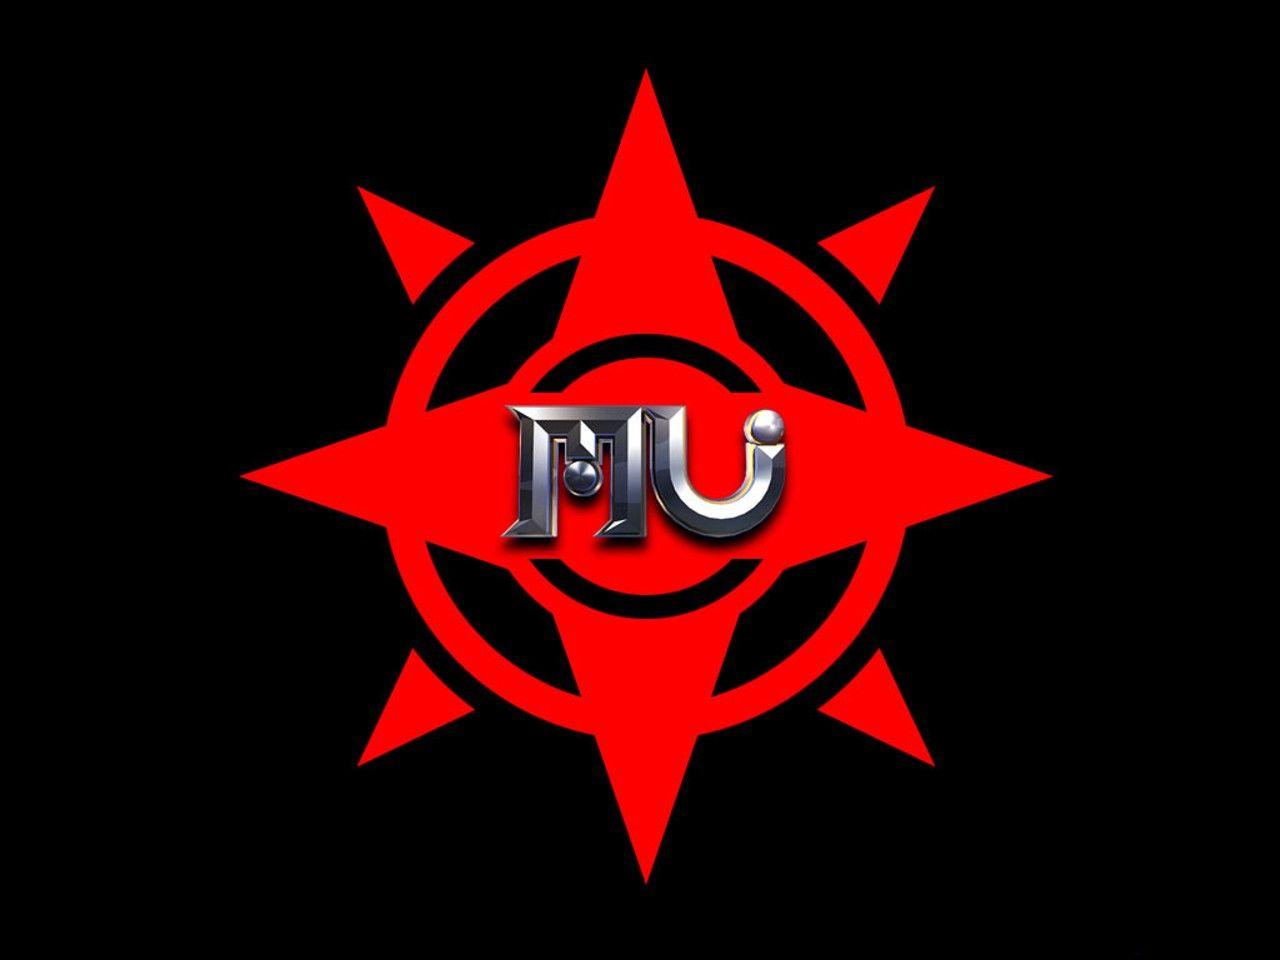 MU Logo - Mu Logos